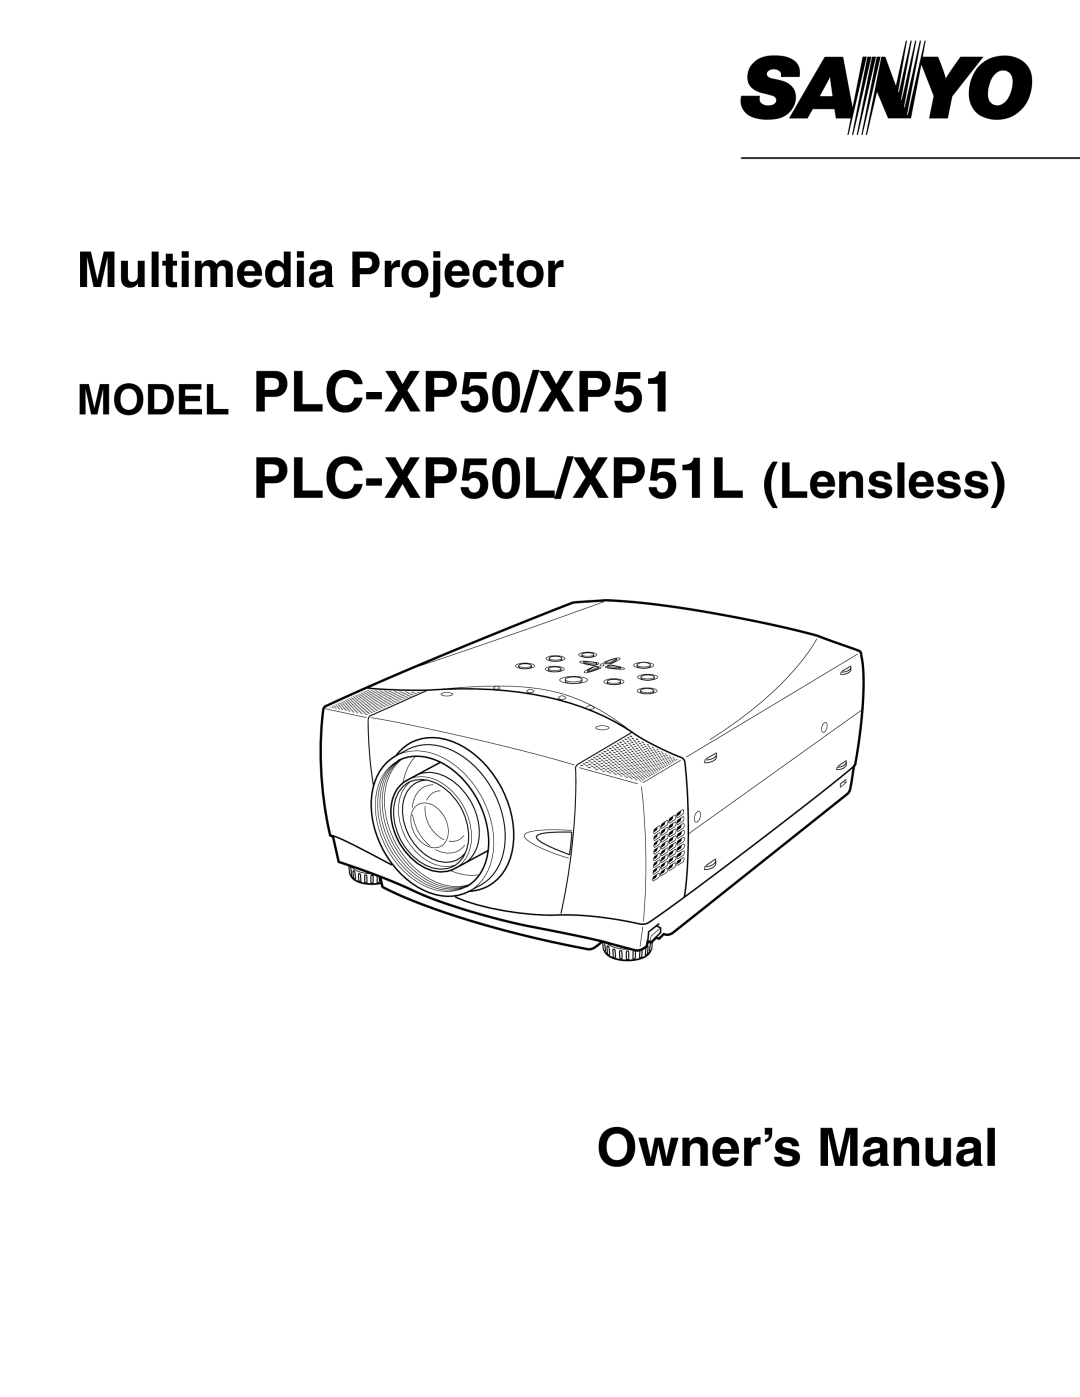 Sanyo owner manual MODEL PLC-XP50/XP51 PLC-XP50L/XP51L Lensless, Owner’s Manual, Multimedia Projector 